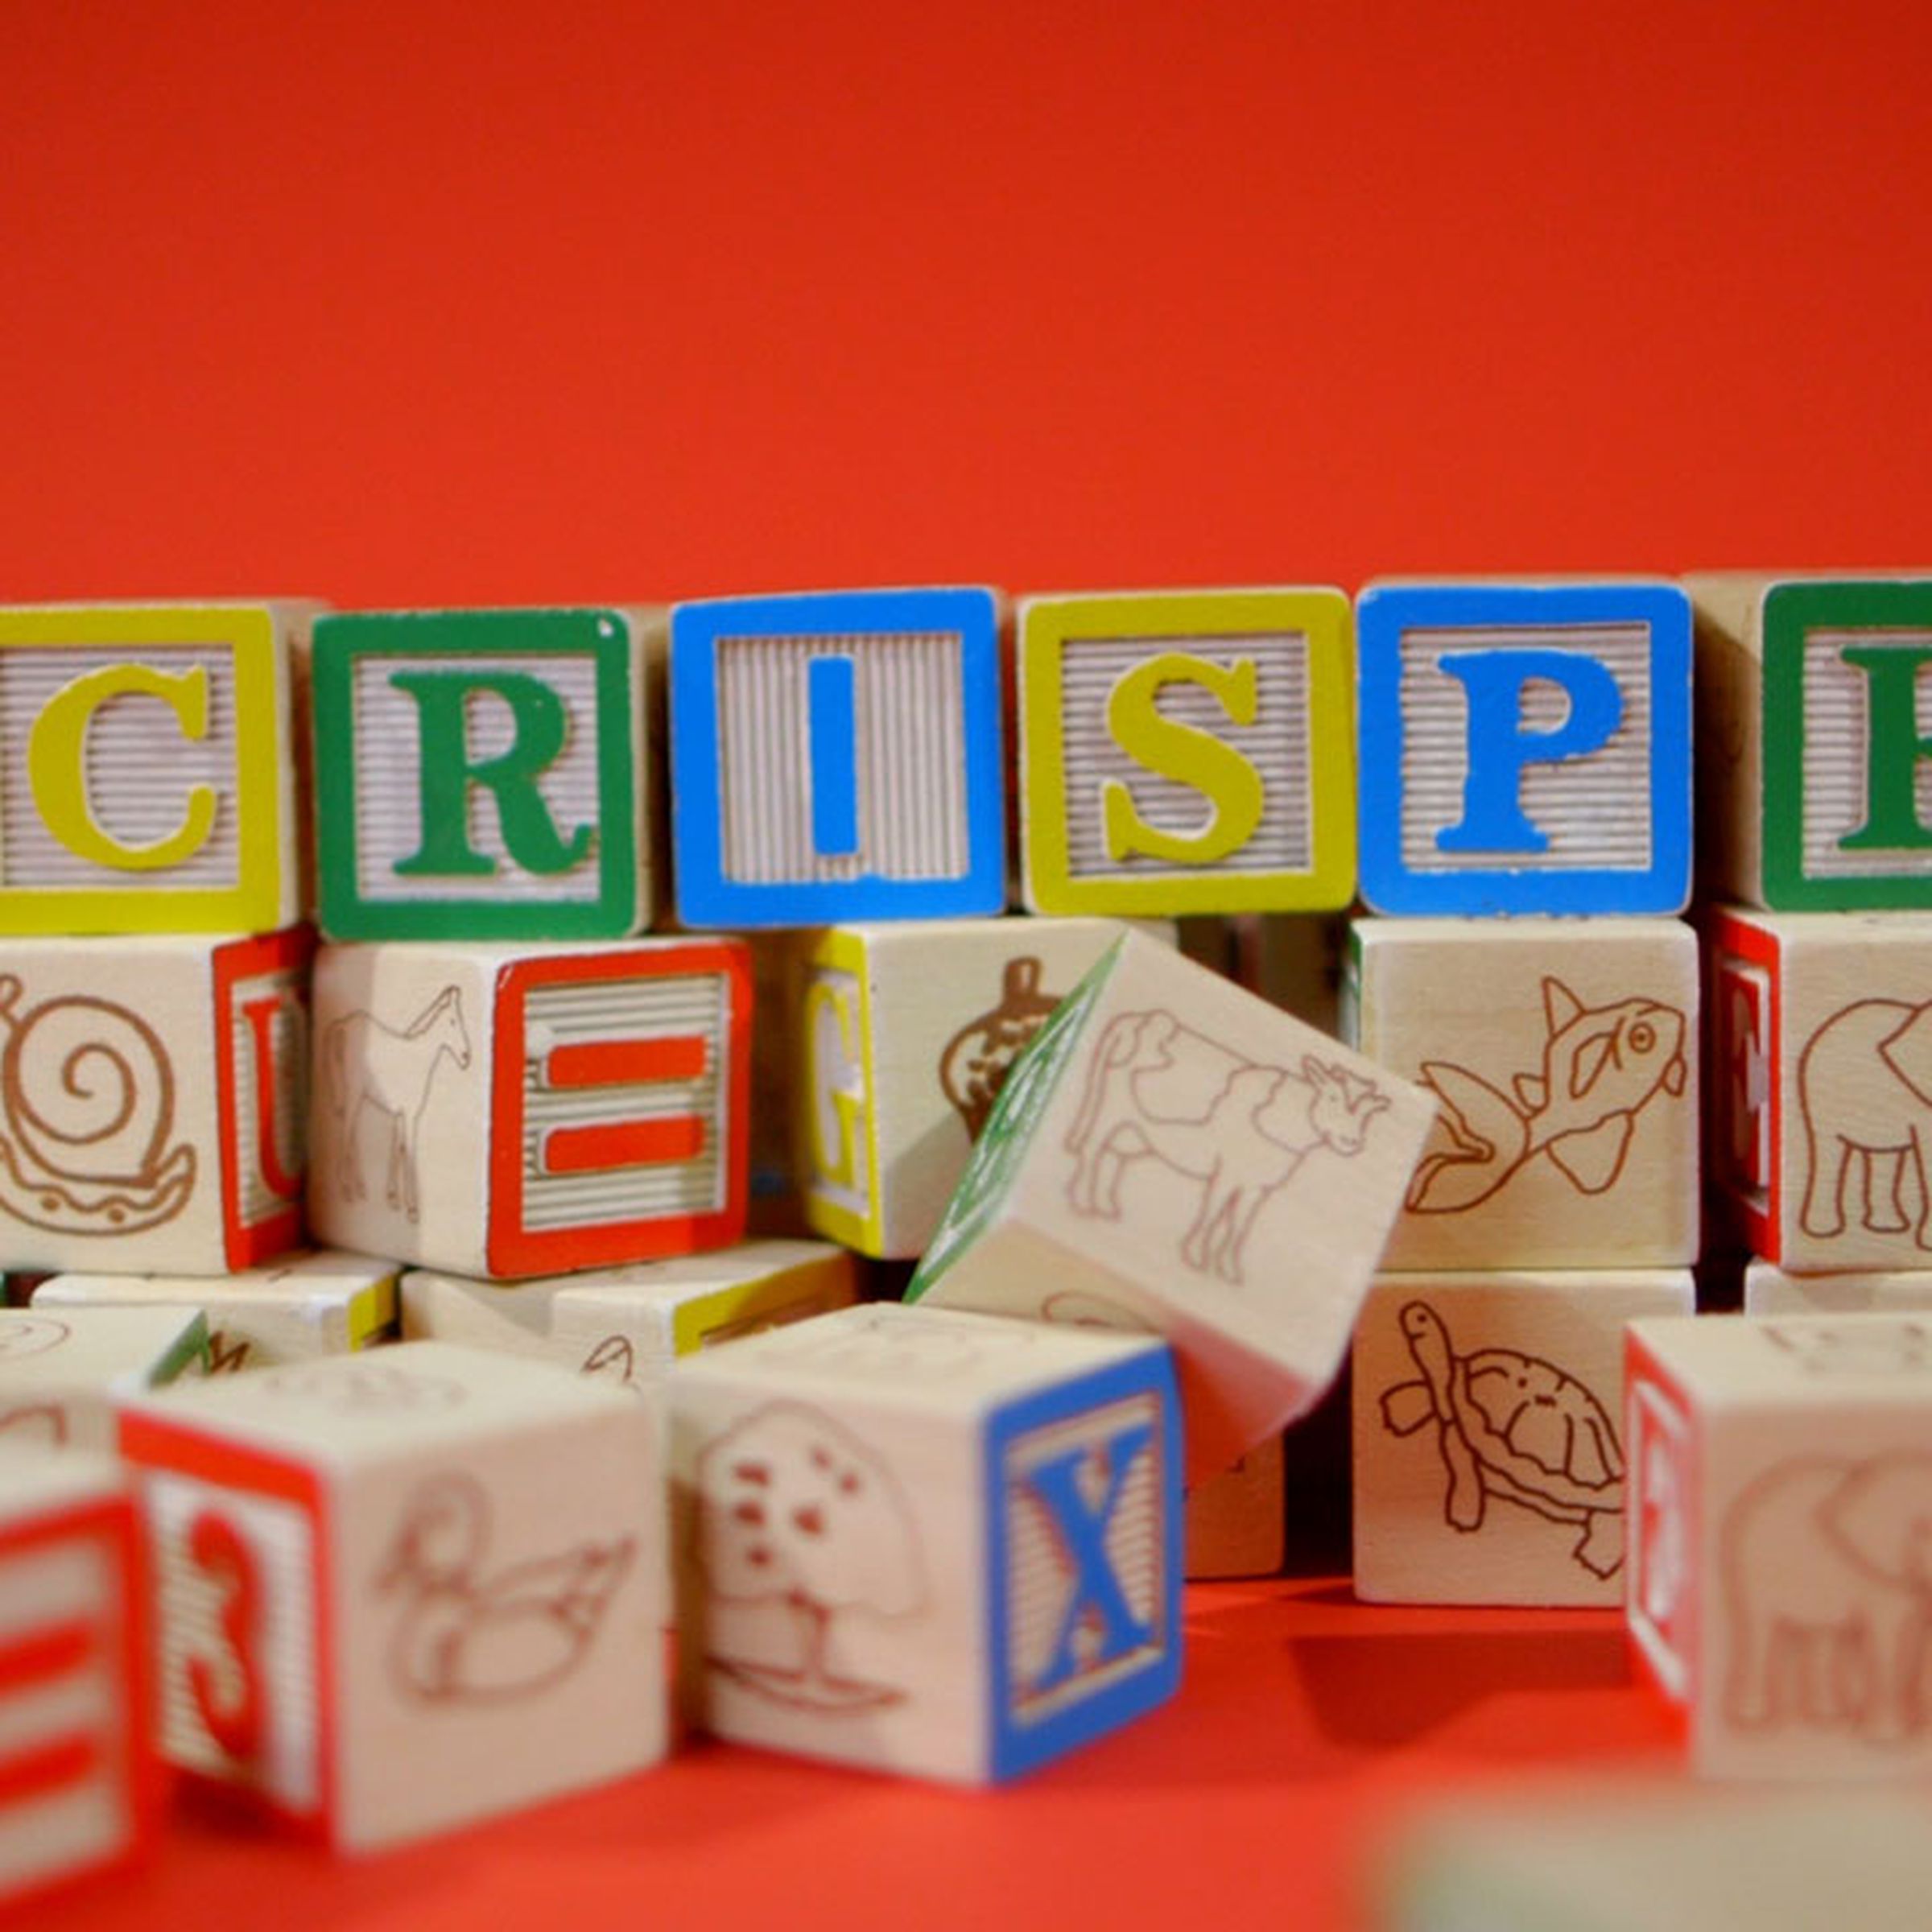 CRISPR lets scientists manipulate the building blocks of life.